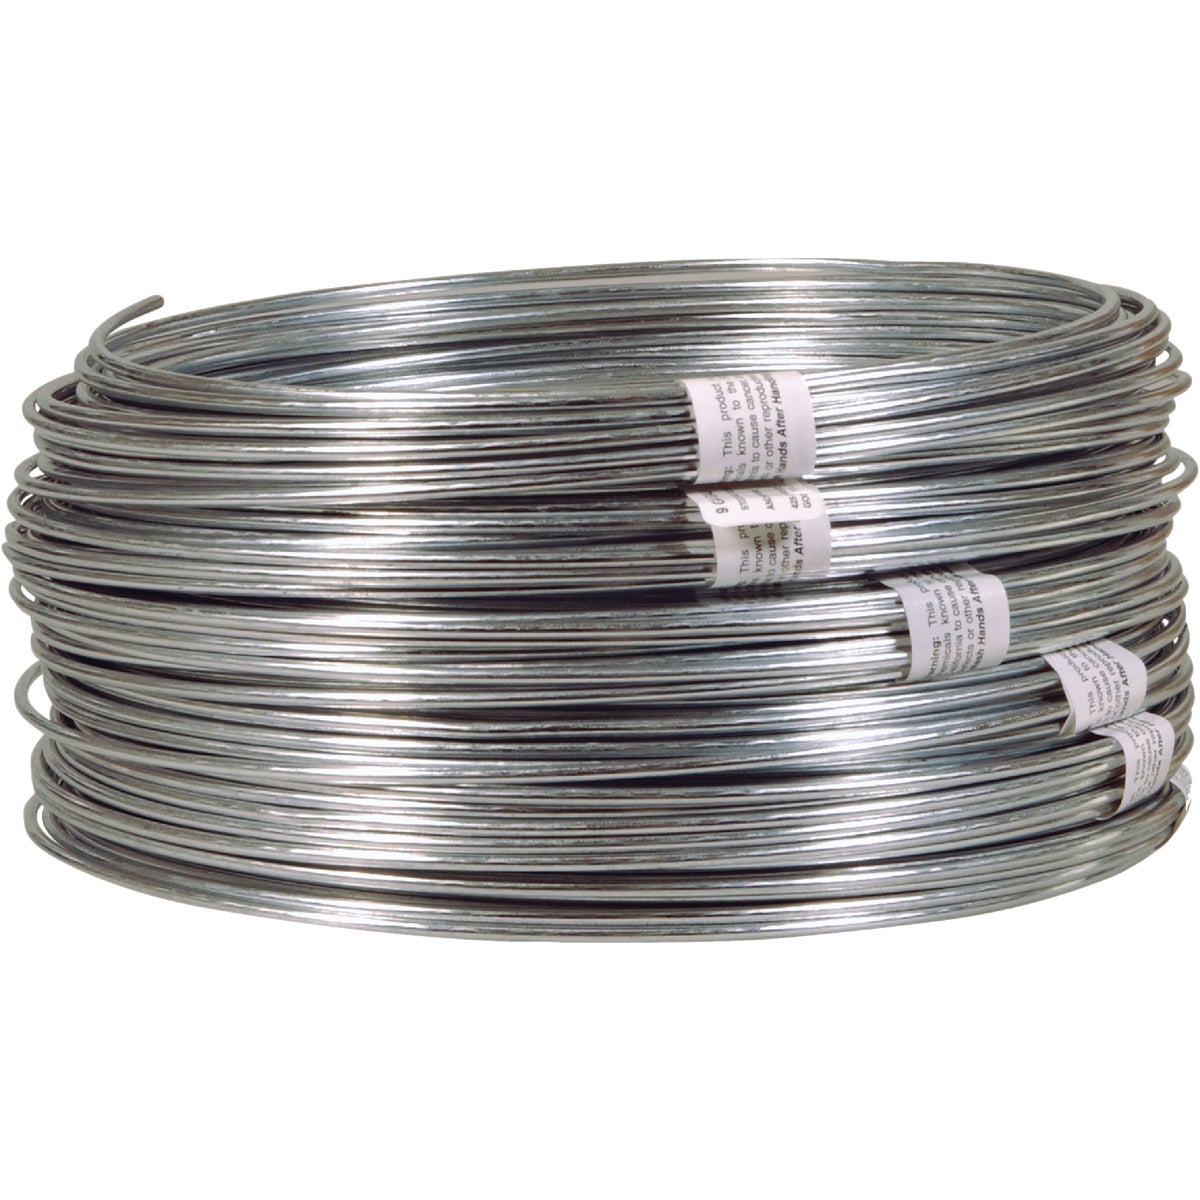 Item 617121, Solid galvanized wire.